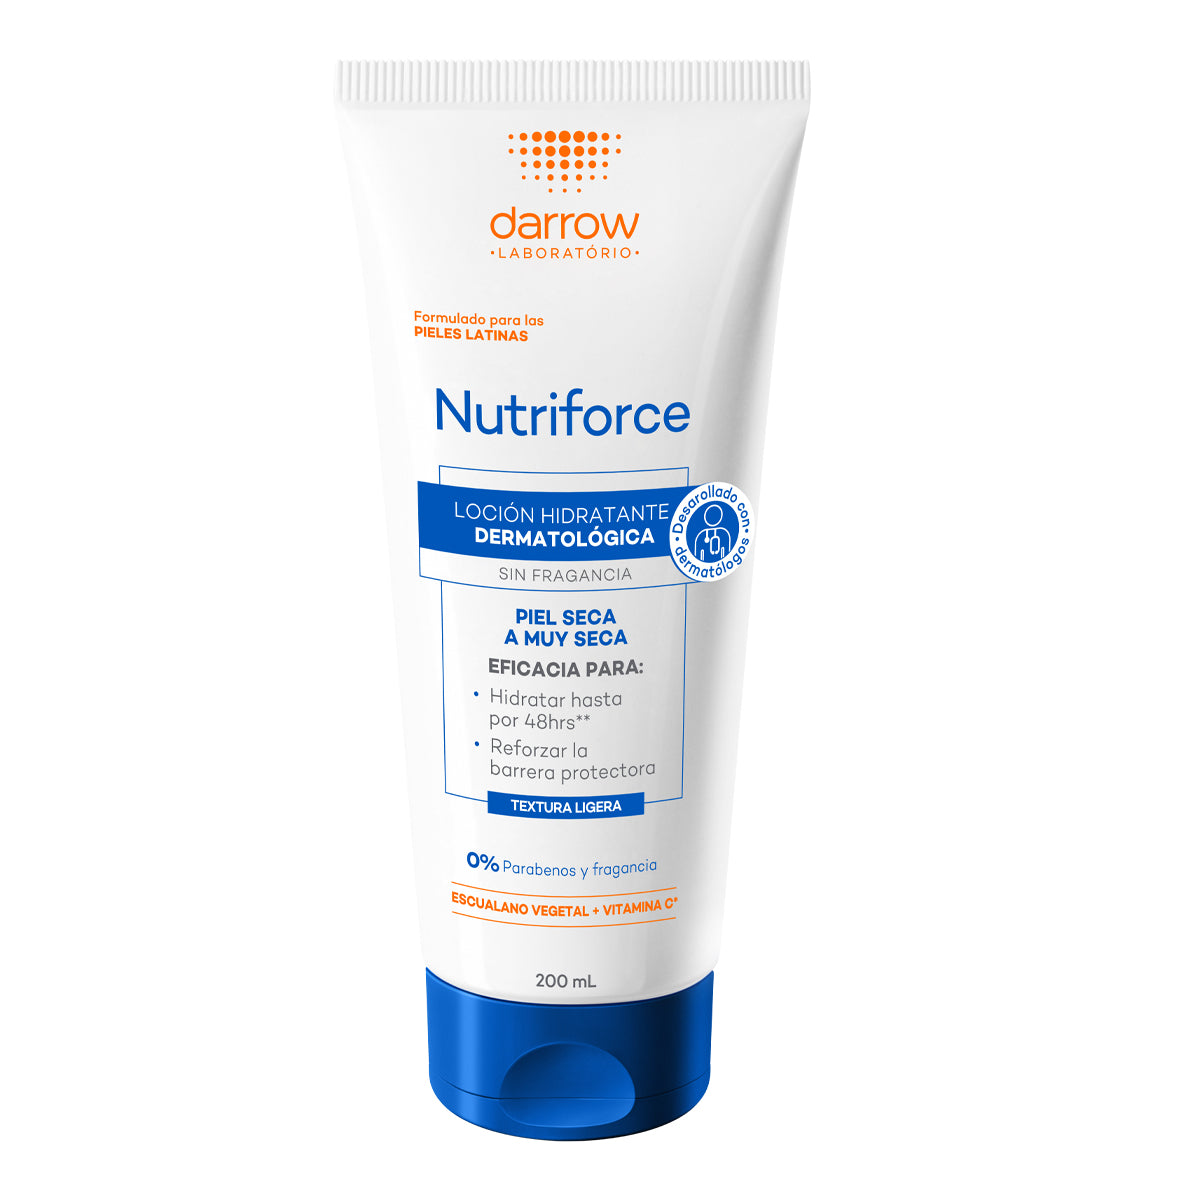 Darrow nutriforce locion hidratante sin perfume 200ml.